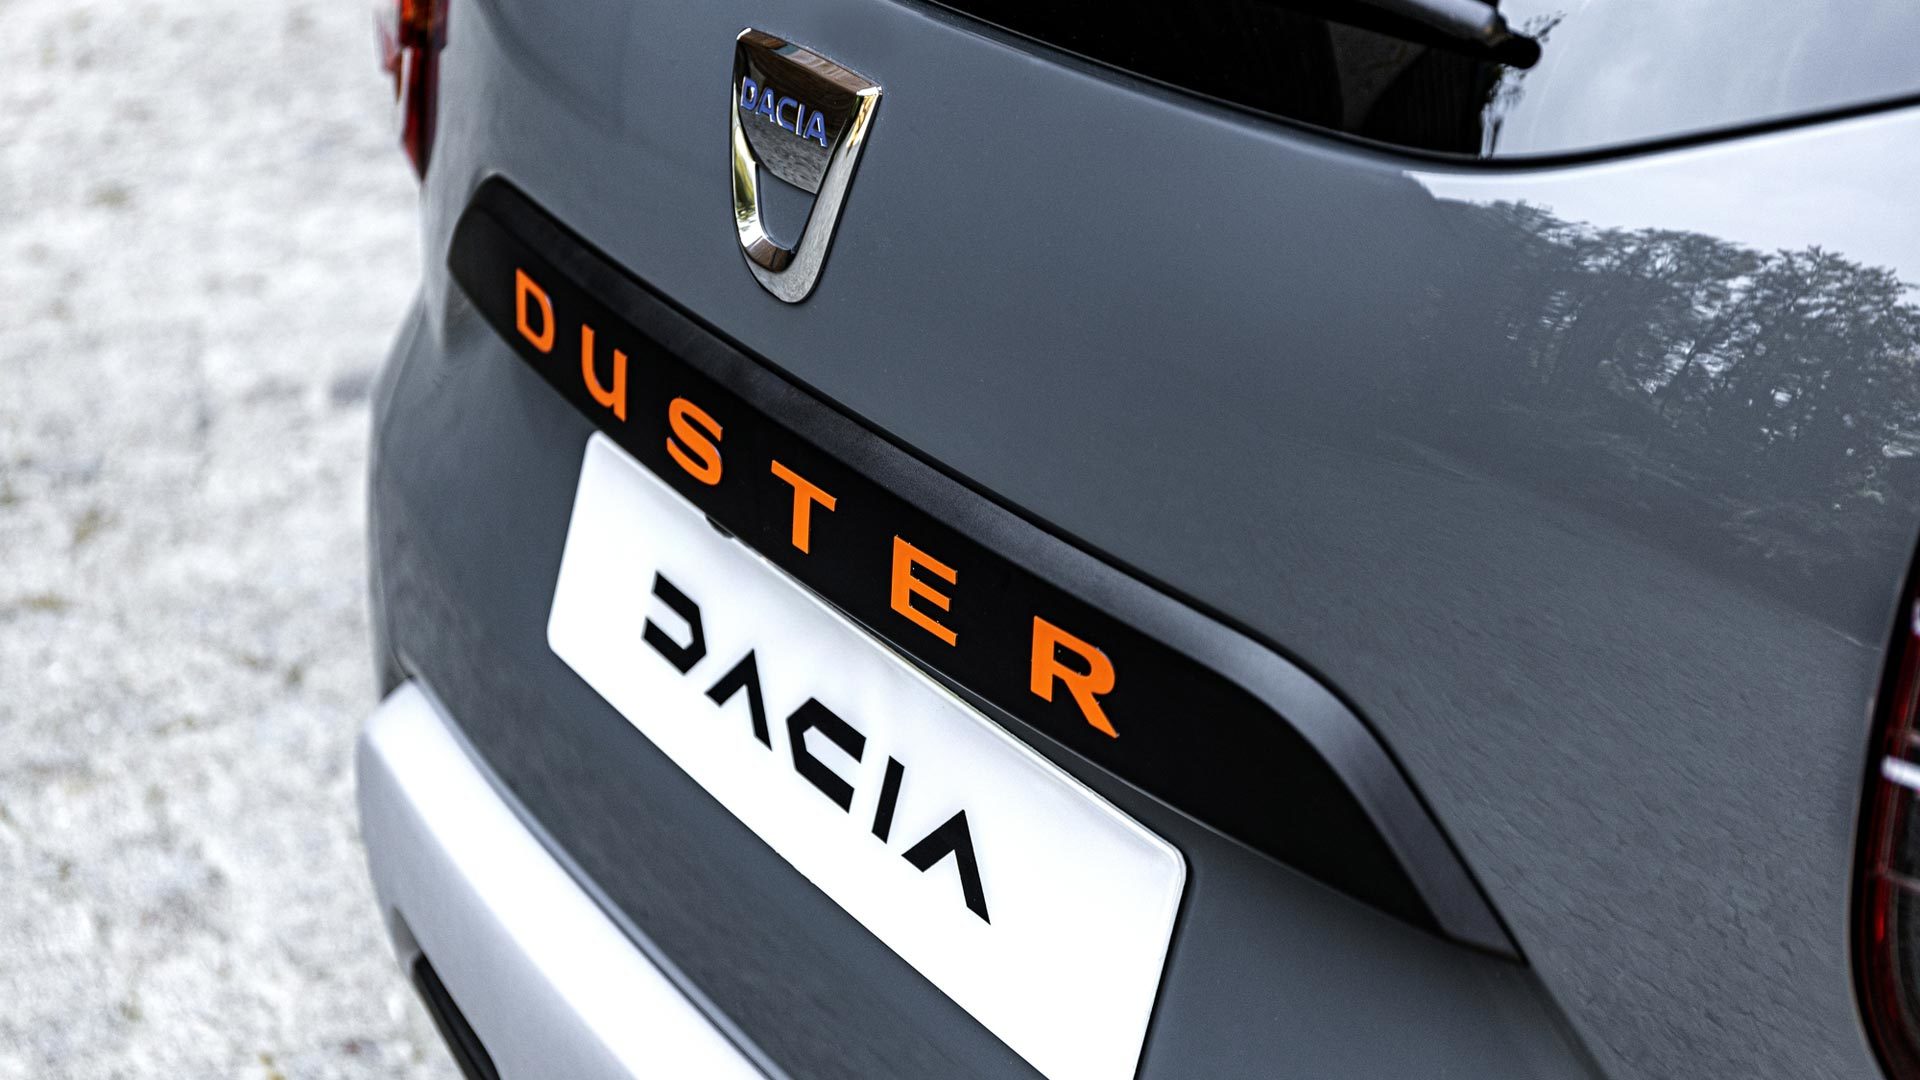 2022 Dacia Duster Extreme SE